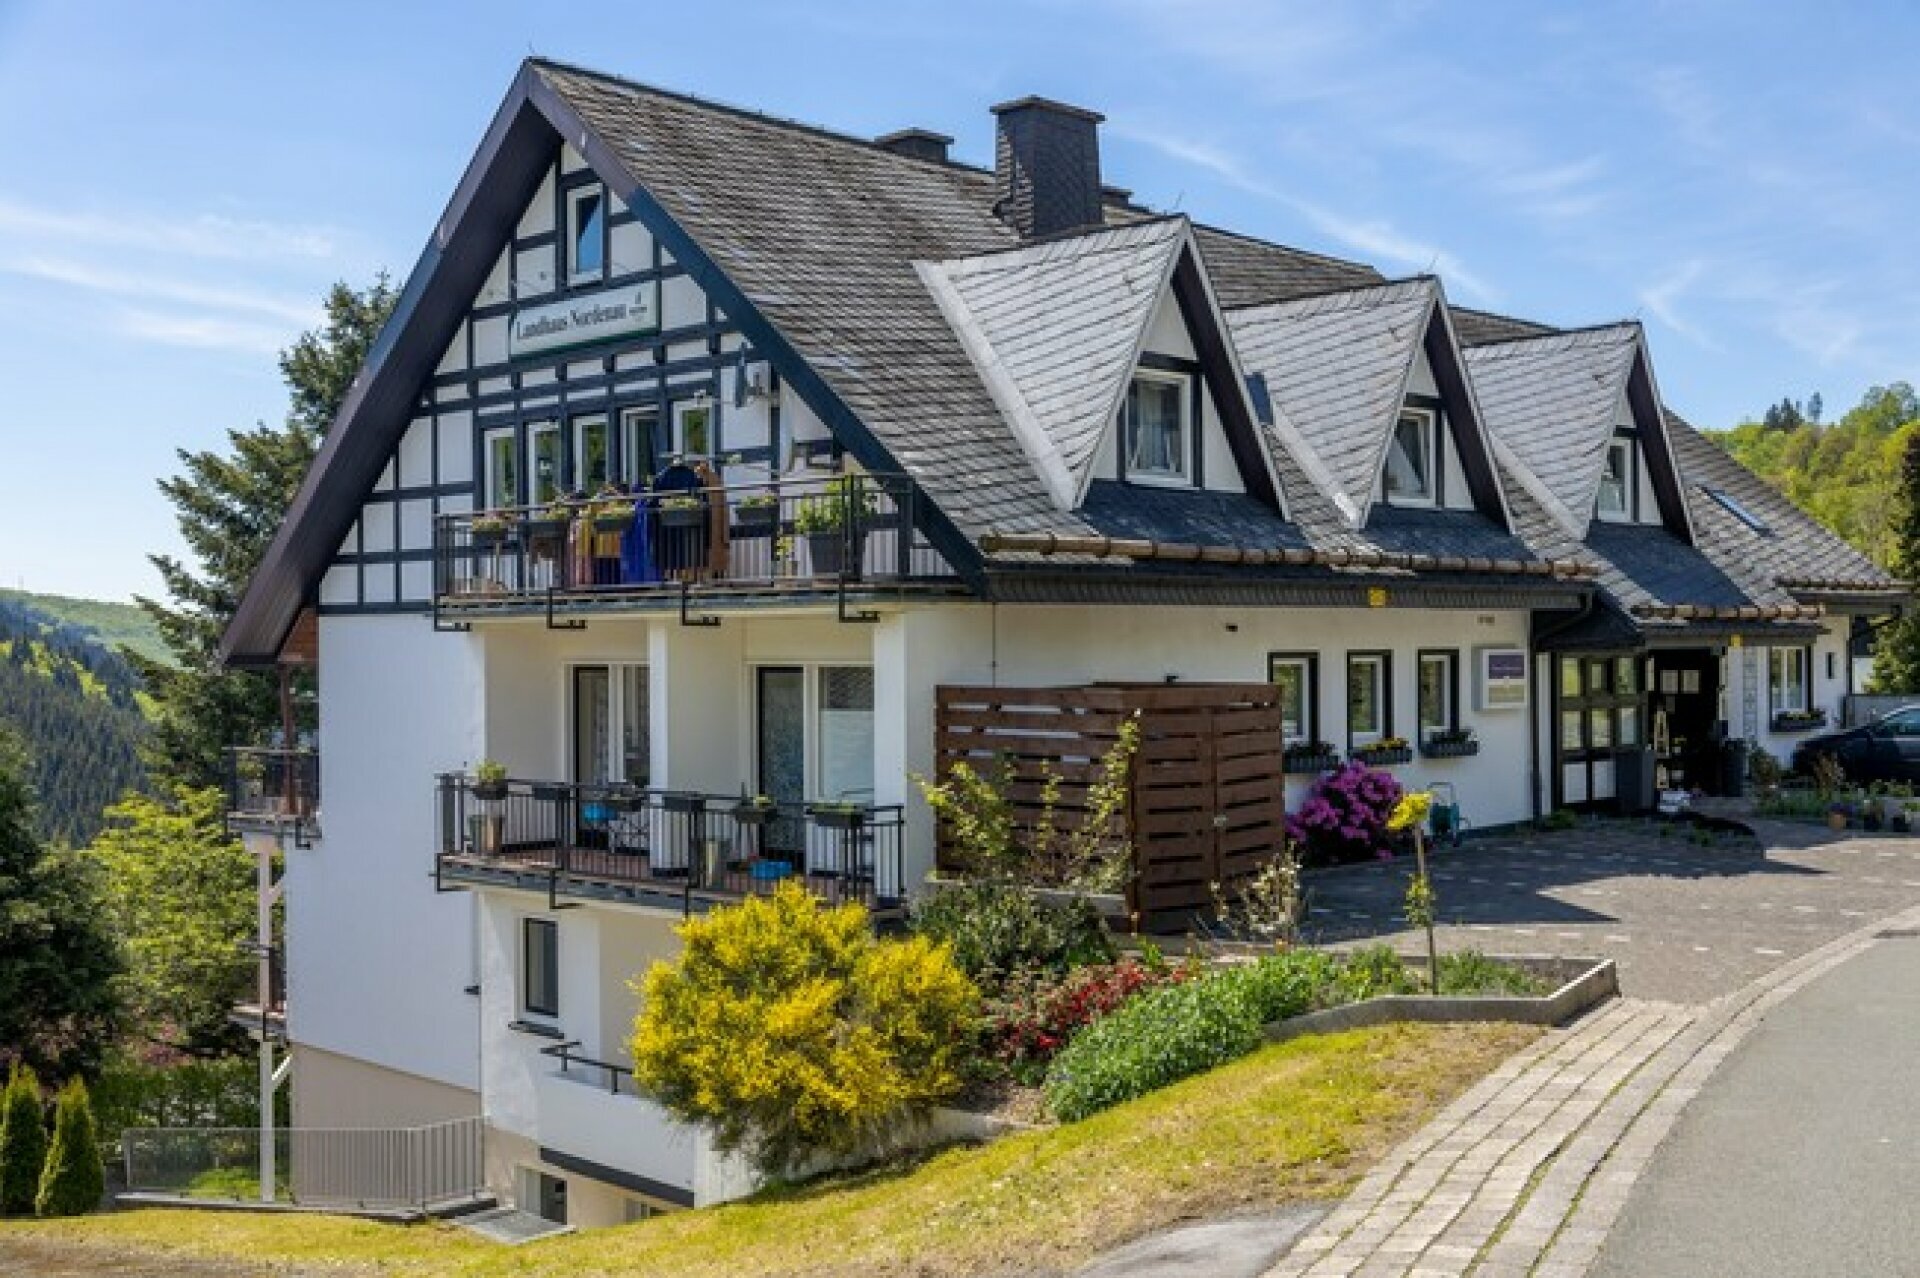 8 Tages-Pauschale mit Halbpension – Hotel Landhaus Nordenau